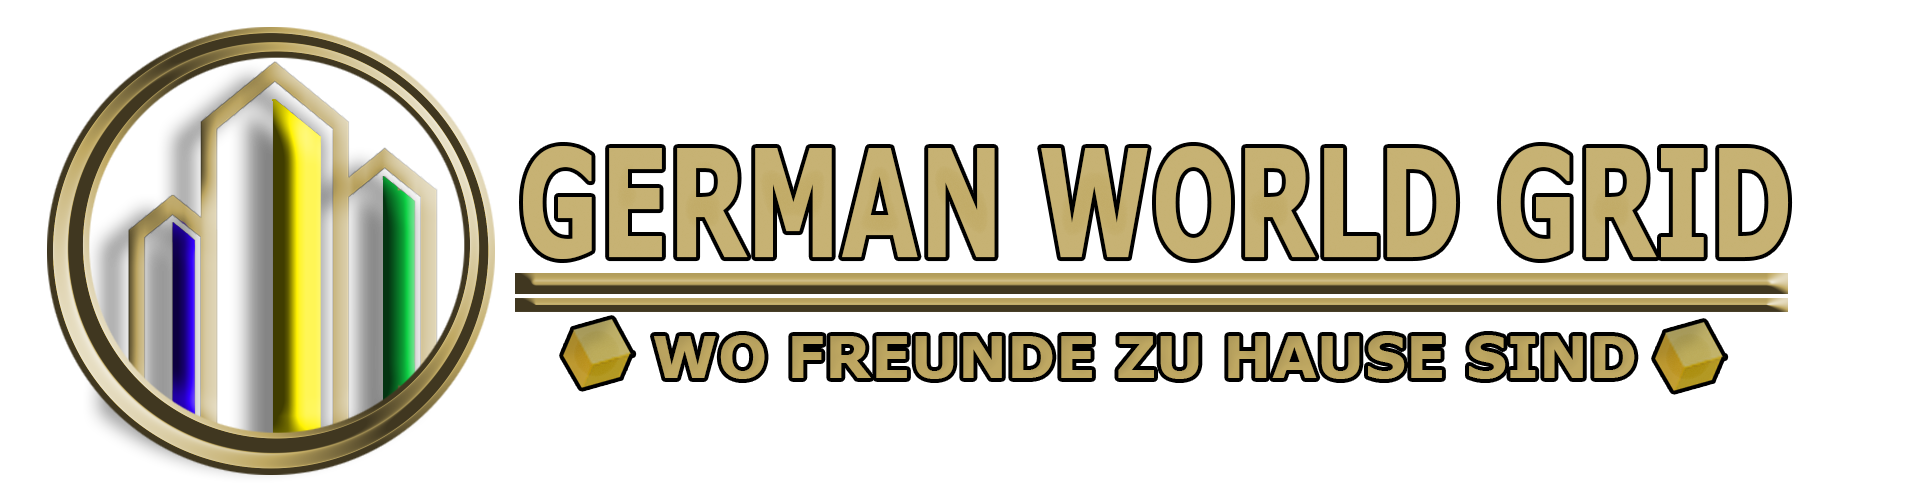 GermanWorldGrid